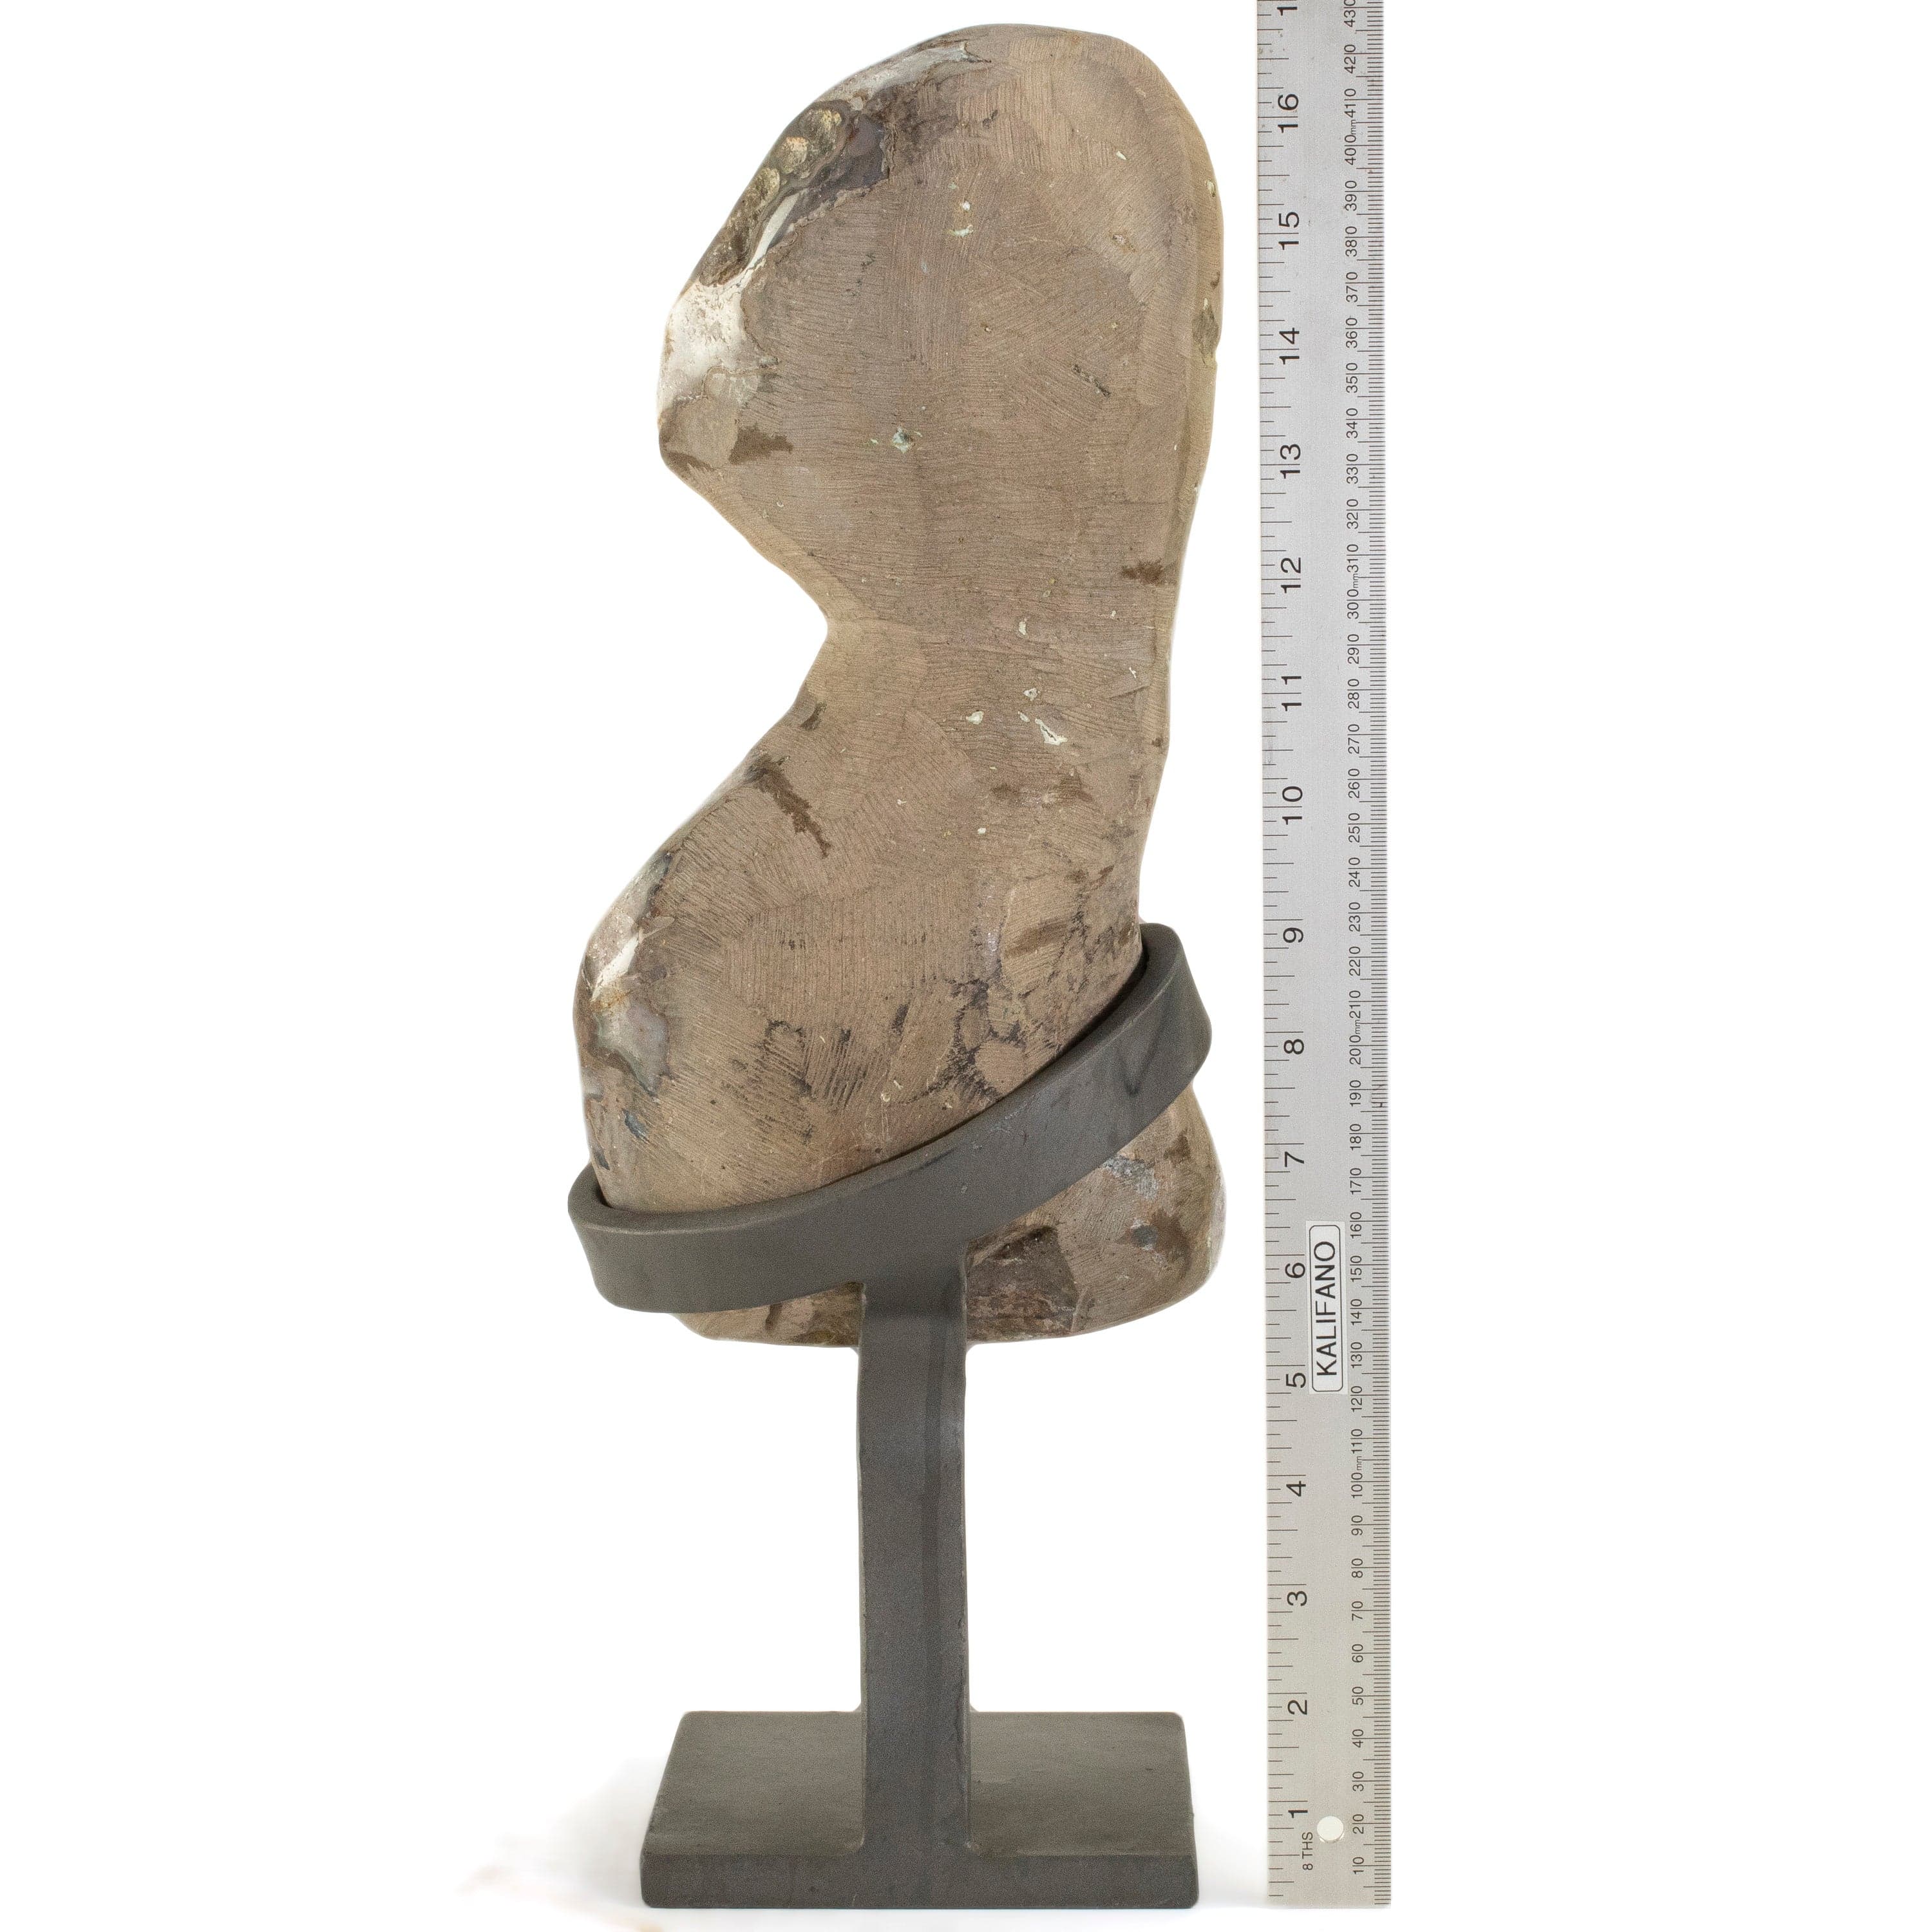 Kalifano Amethyst Uruguayan Amethyst Geode on Custom Stand - 13.9 lbs / 17 in. UAG6300.001